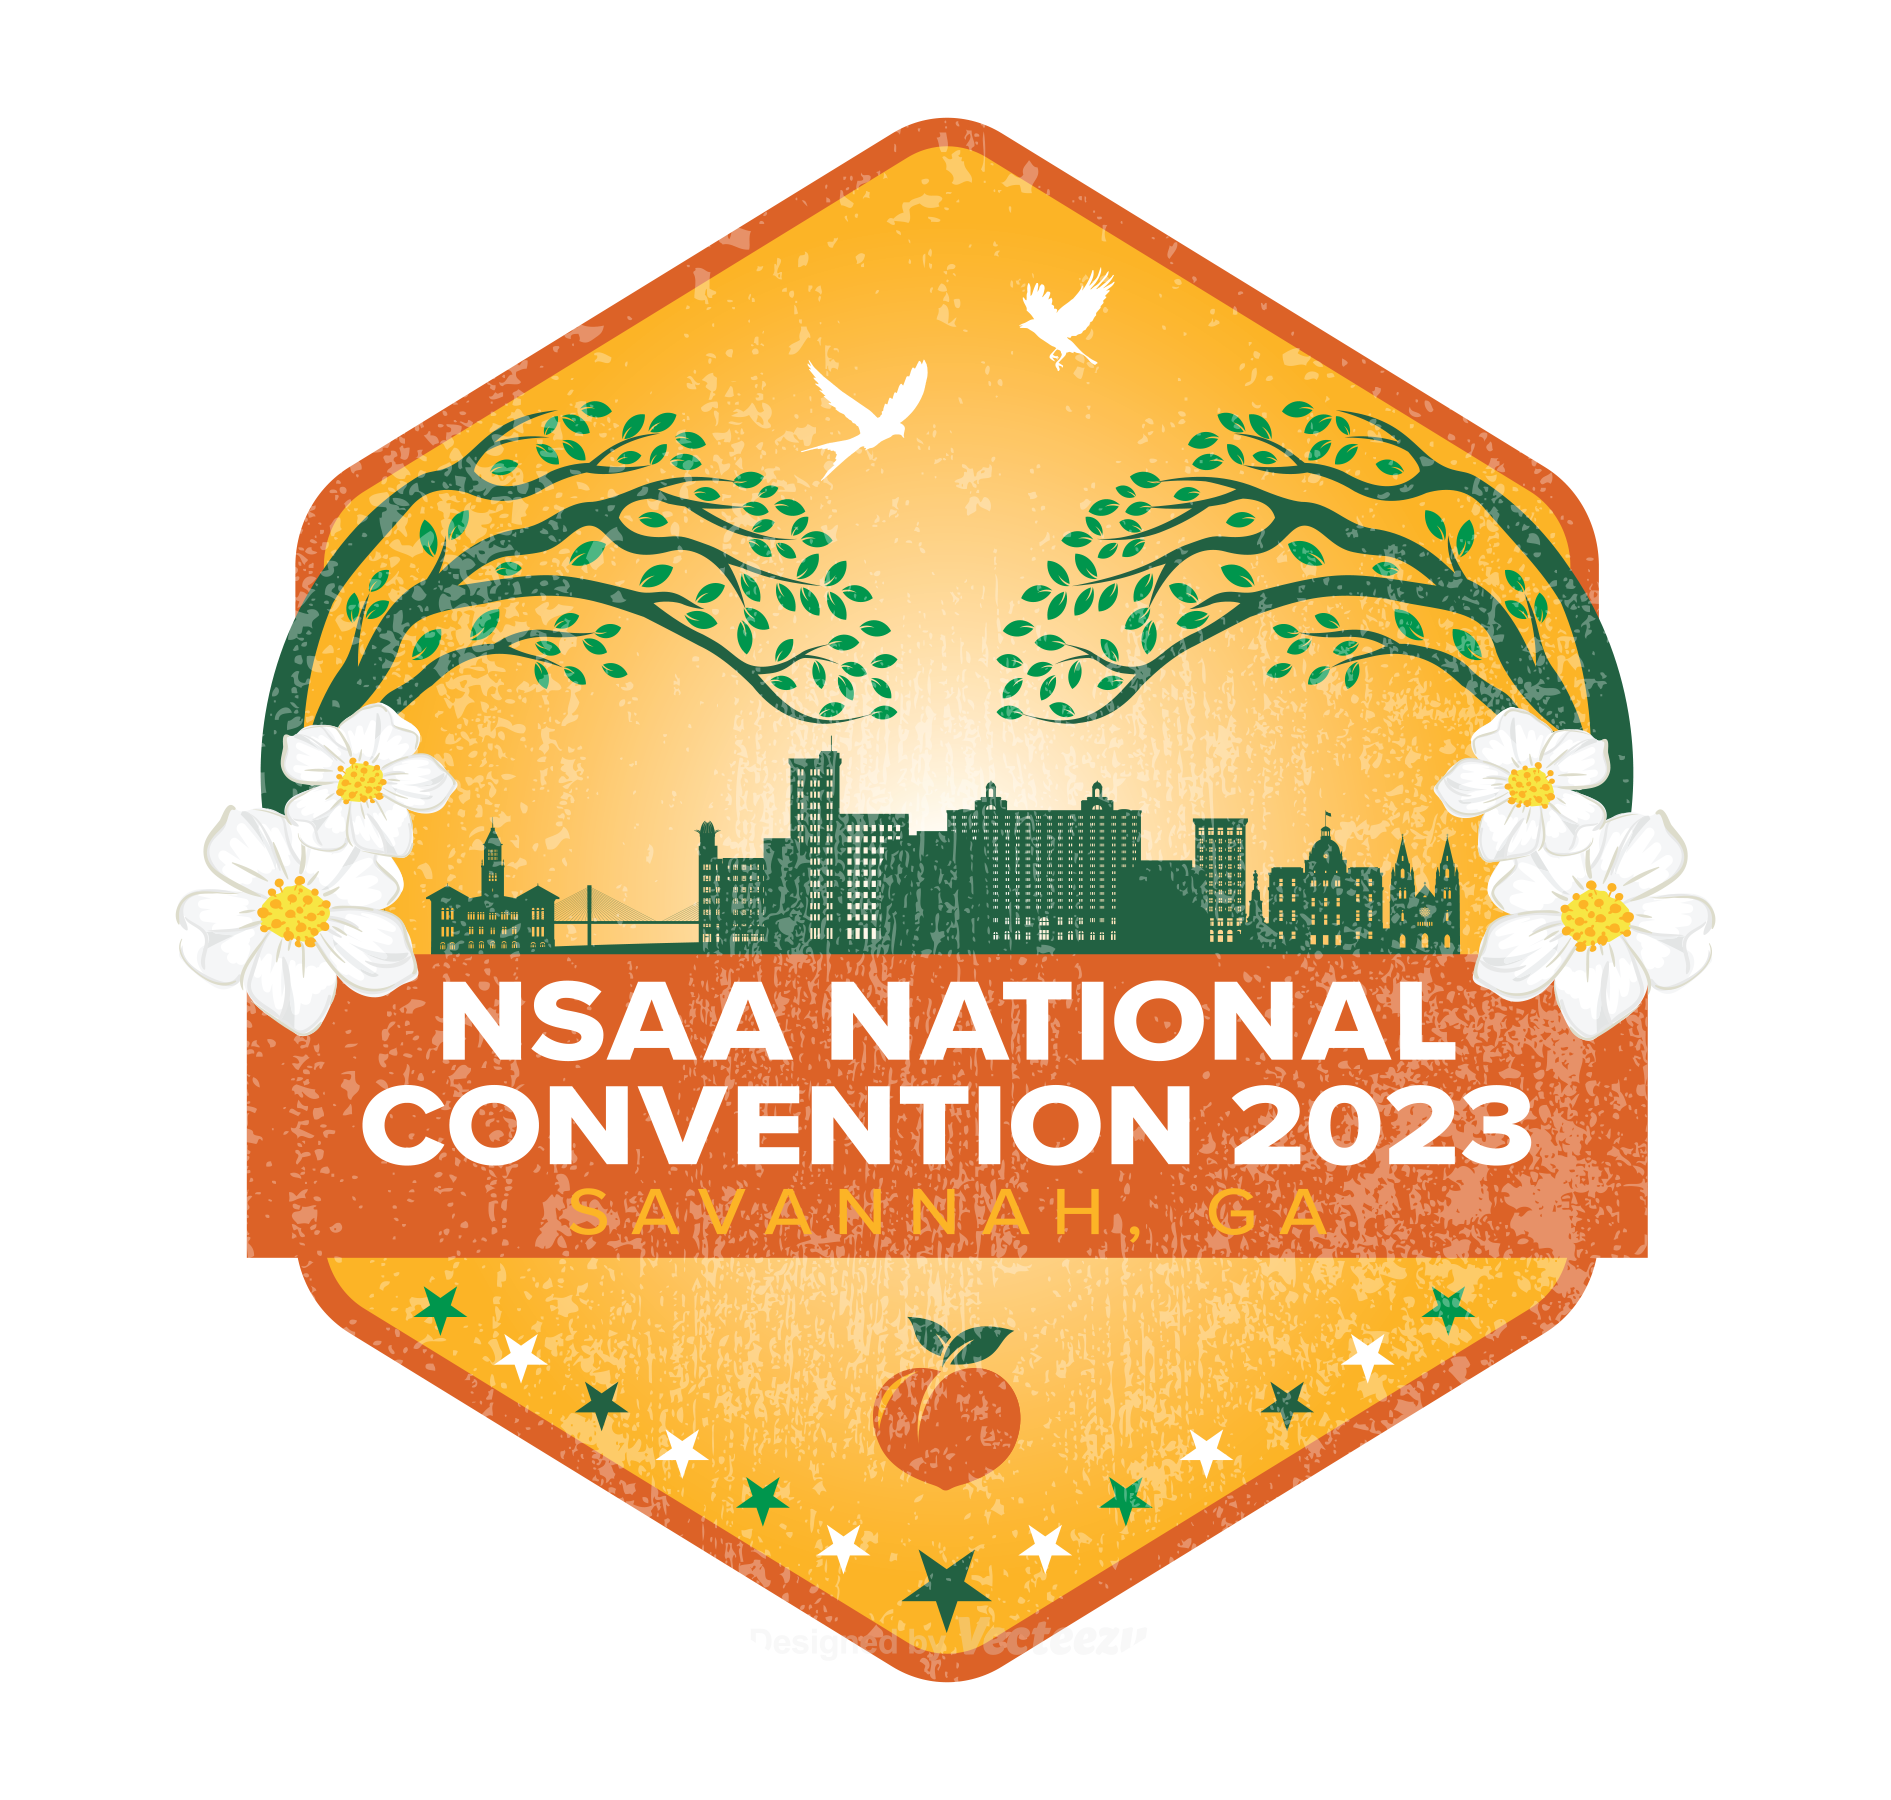 NSAA National Convention 2023 sticker